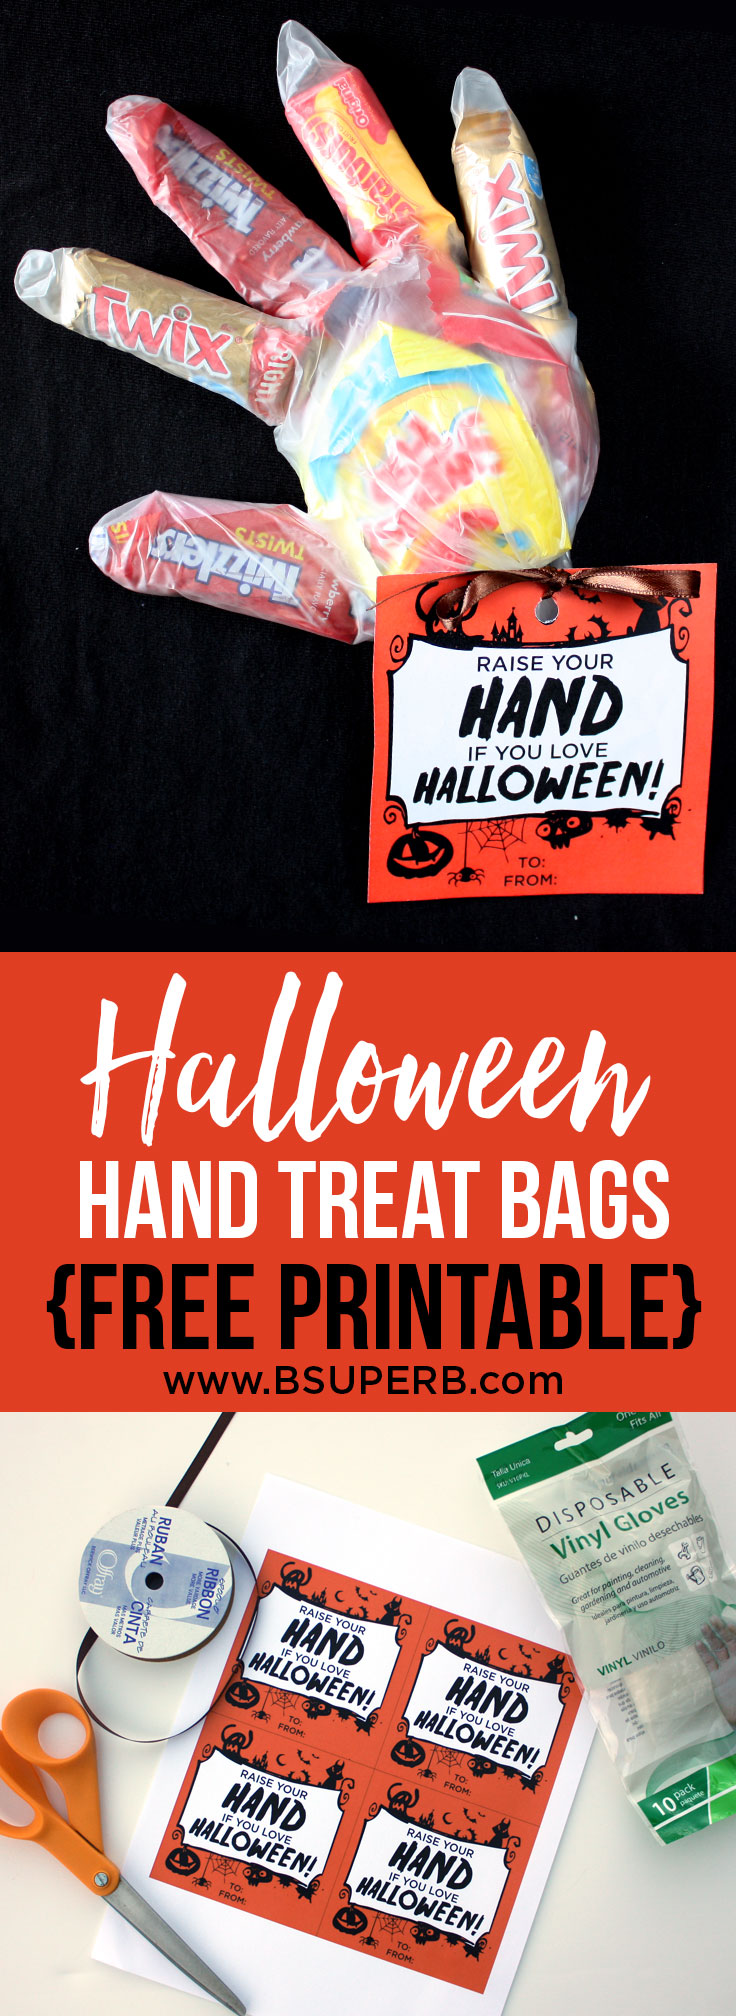 Halloween Hand Treat Bags